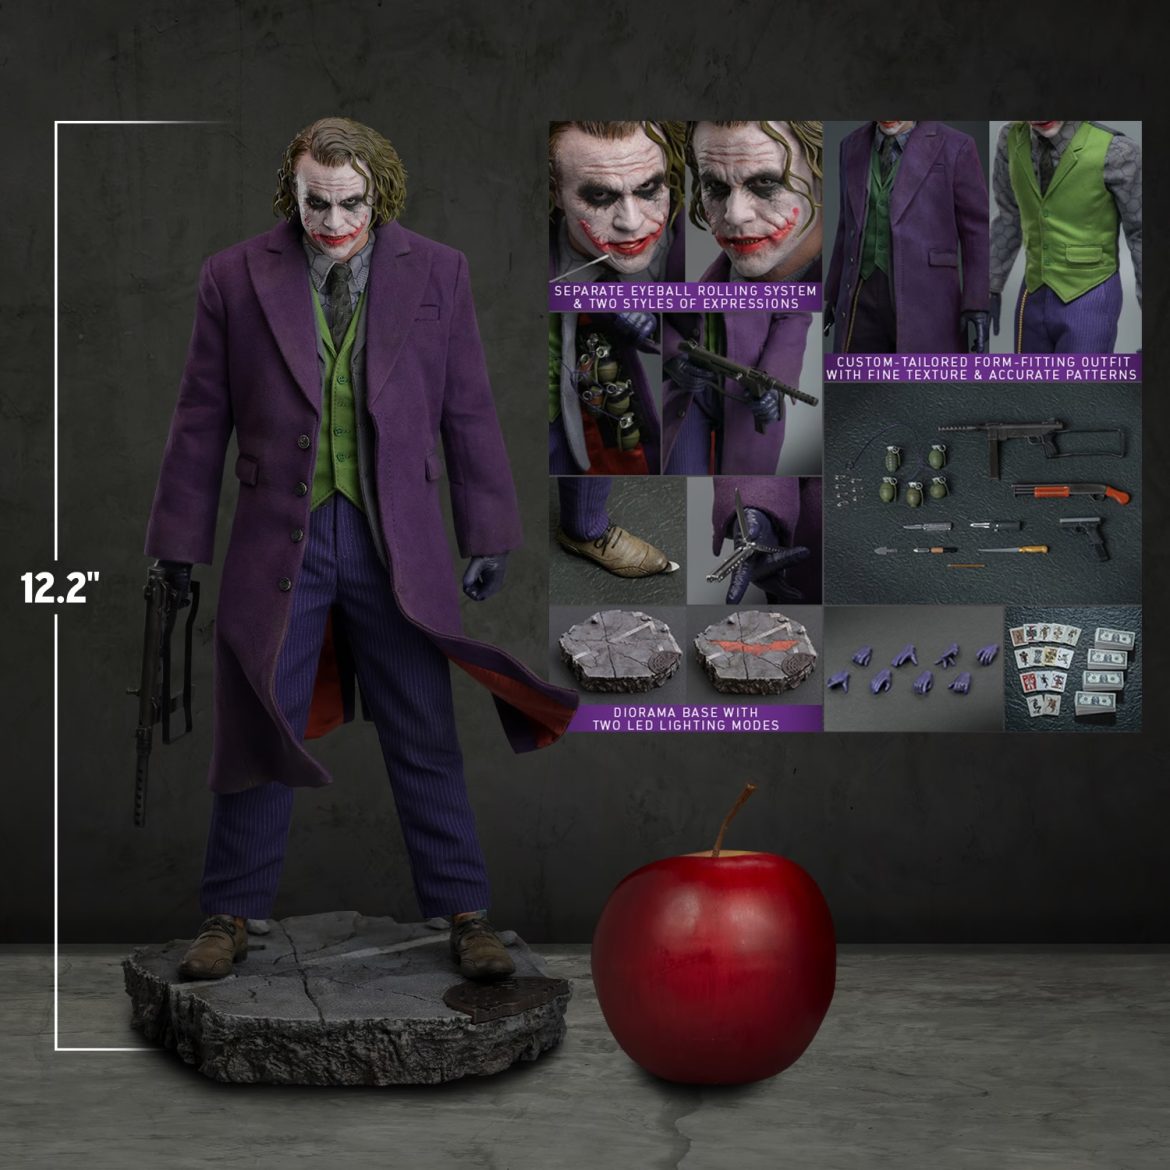 Hot Toys announces a new Dark Knight version of Joker